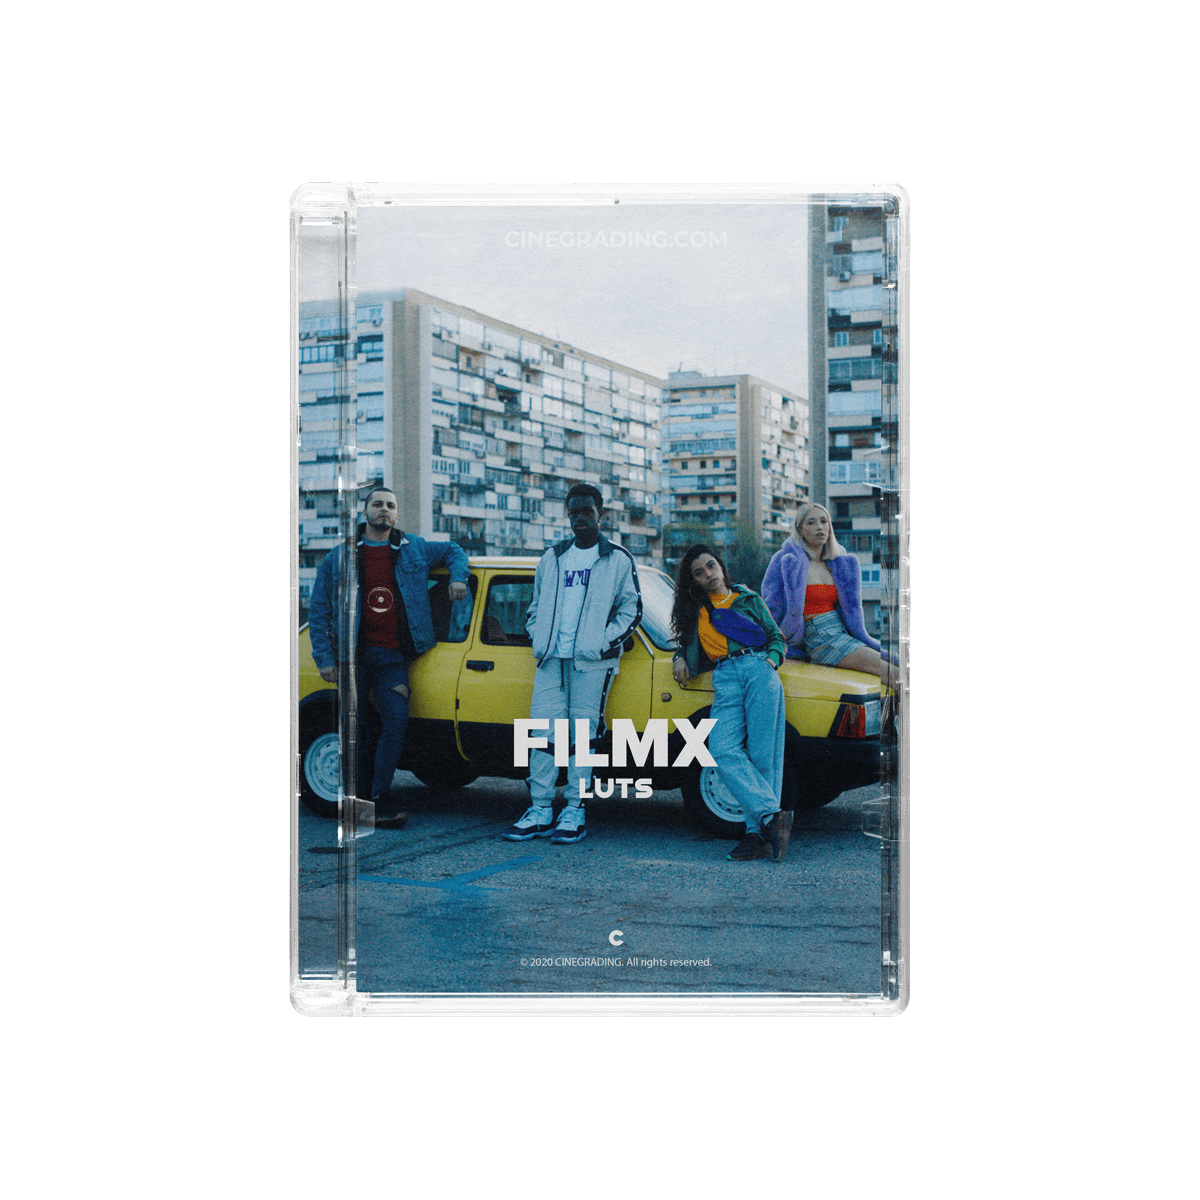 +Cine FilmX LUTs - CINEGRADING